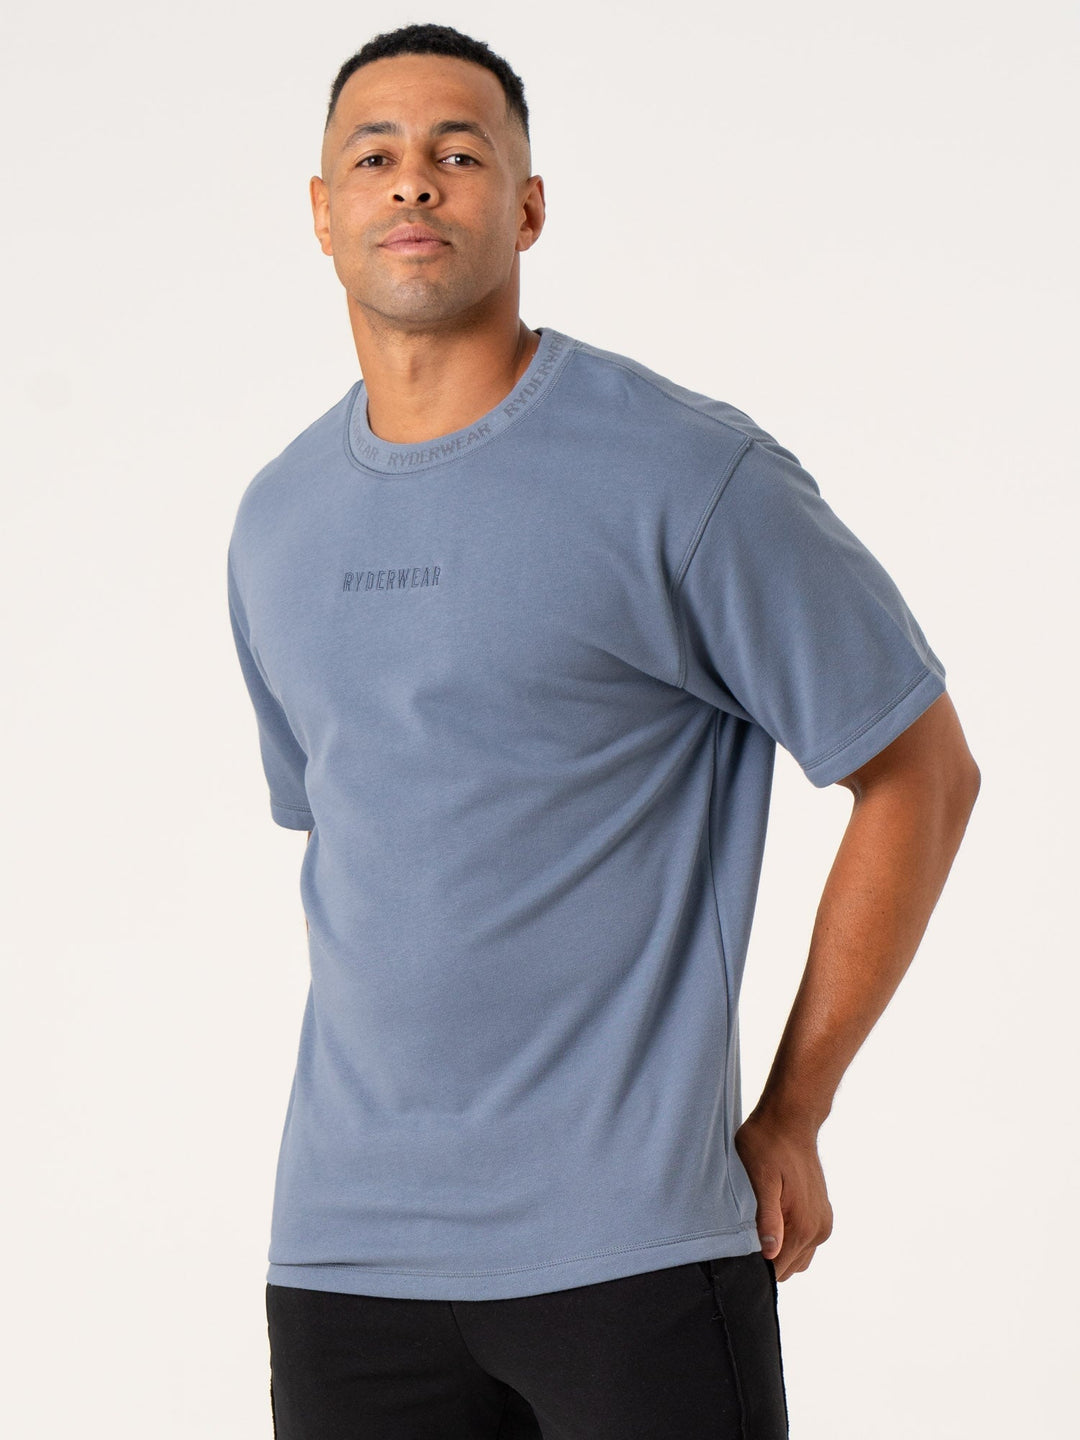 Pursuit Fleece T-Shirt - Denim Blue Clothing Ryderwear 